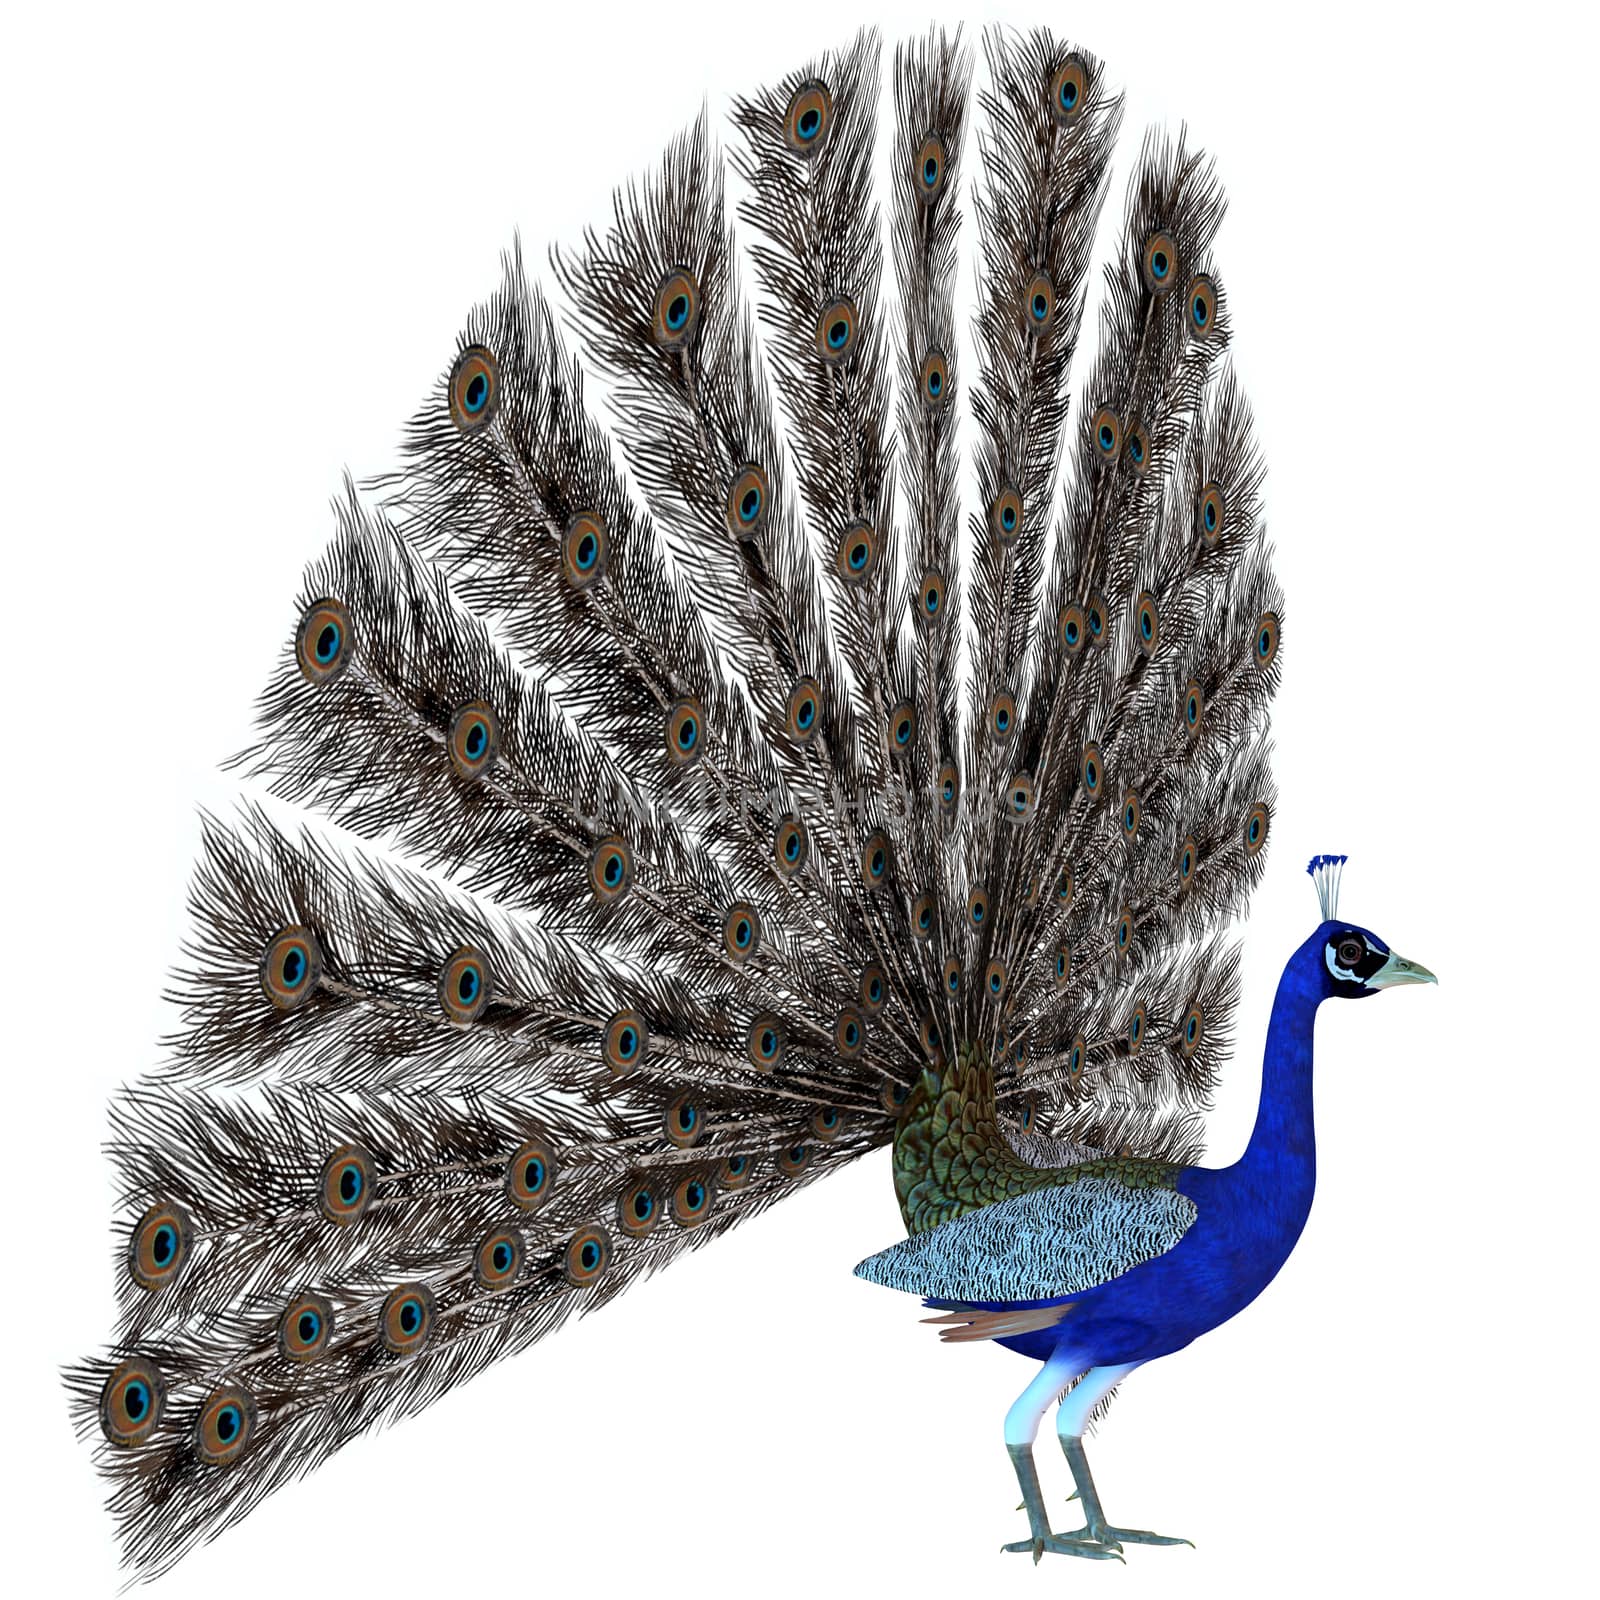 Peacock Display by Catmando